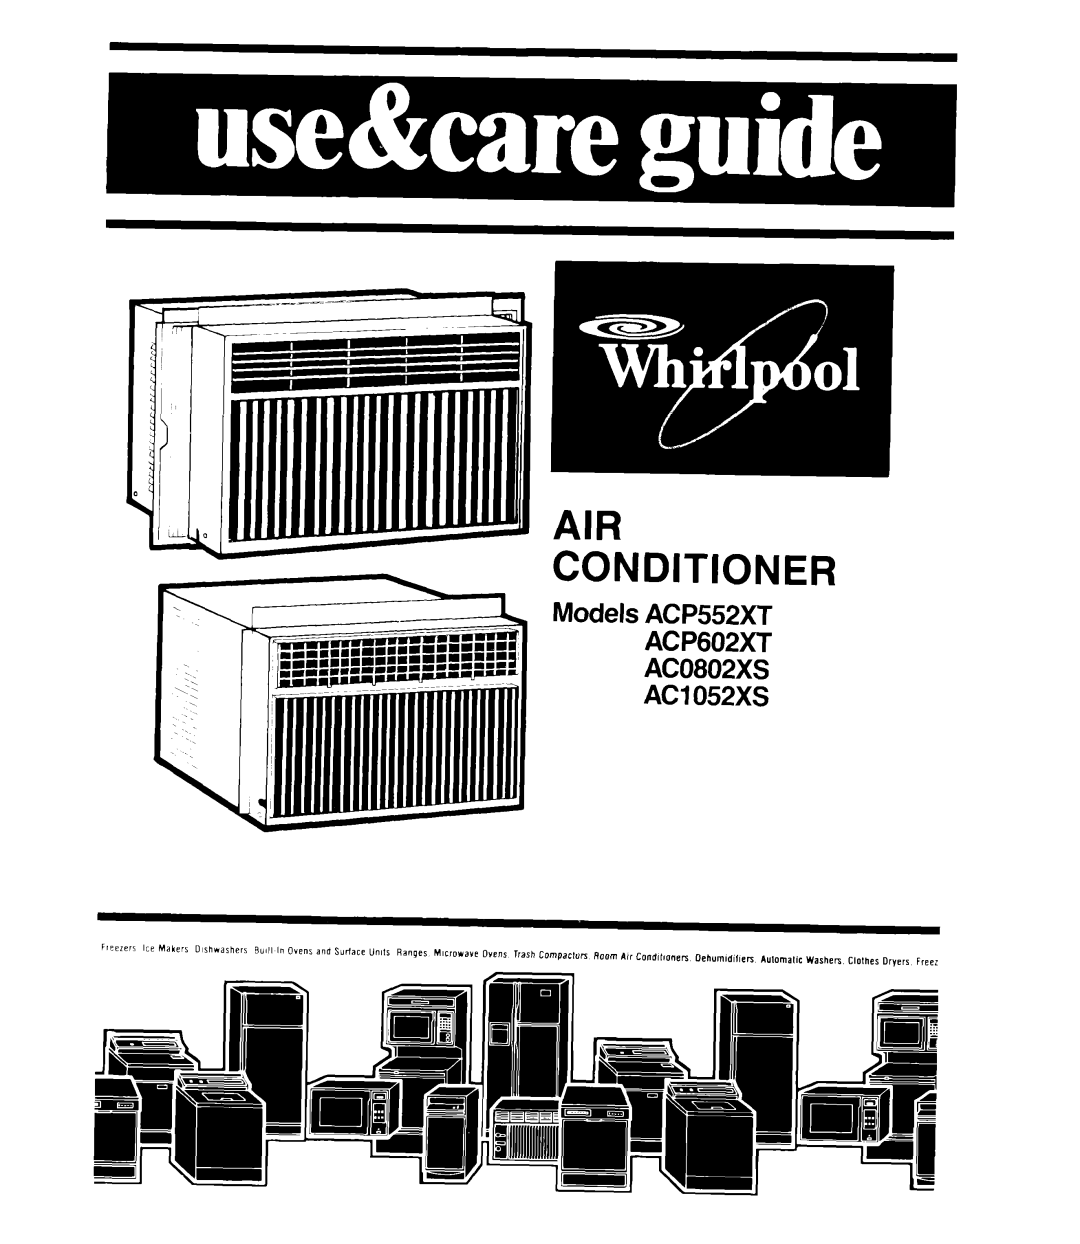 Whirlpool AC1052XS manual Air Conditioner, Models ACP552XT ACP602XT ACO802XS AC1 052XS 